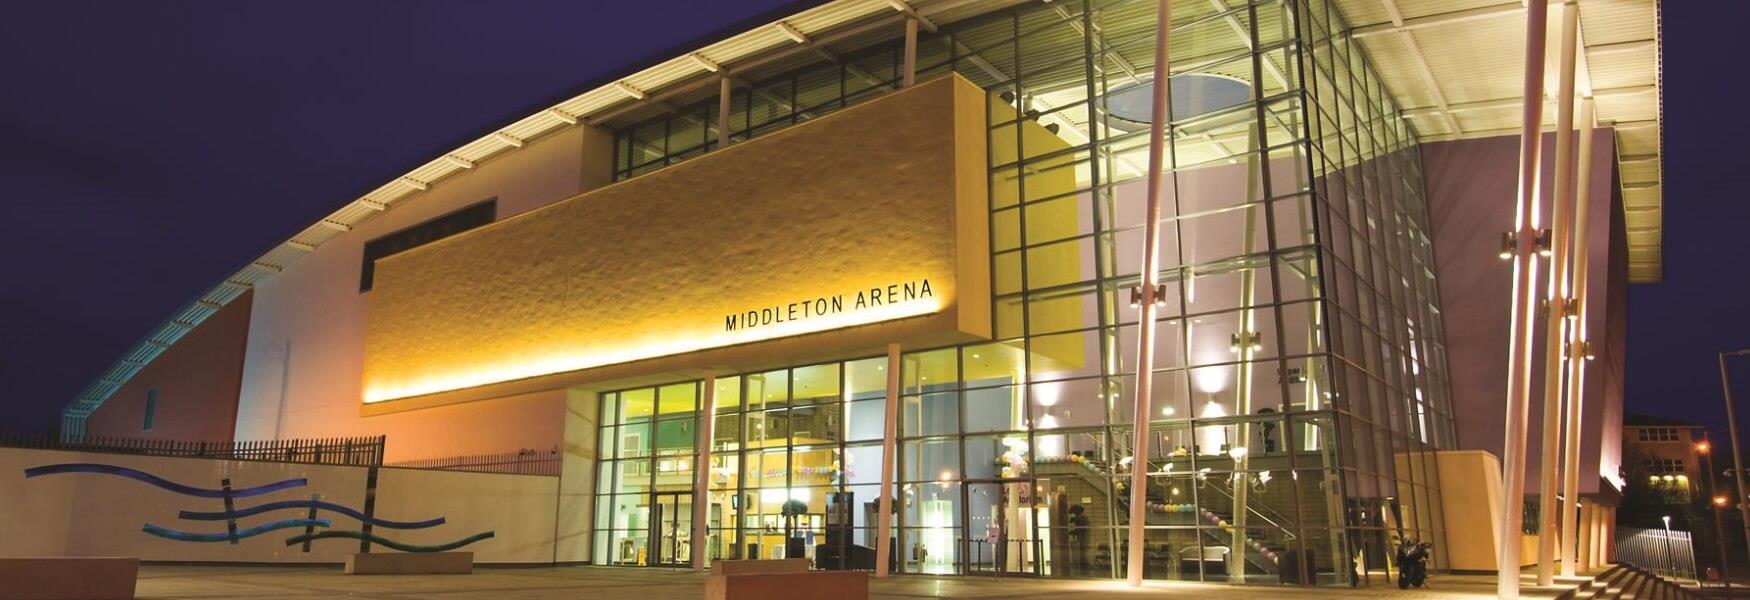 Exterior of Middleton Arena at night.